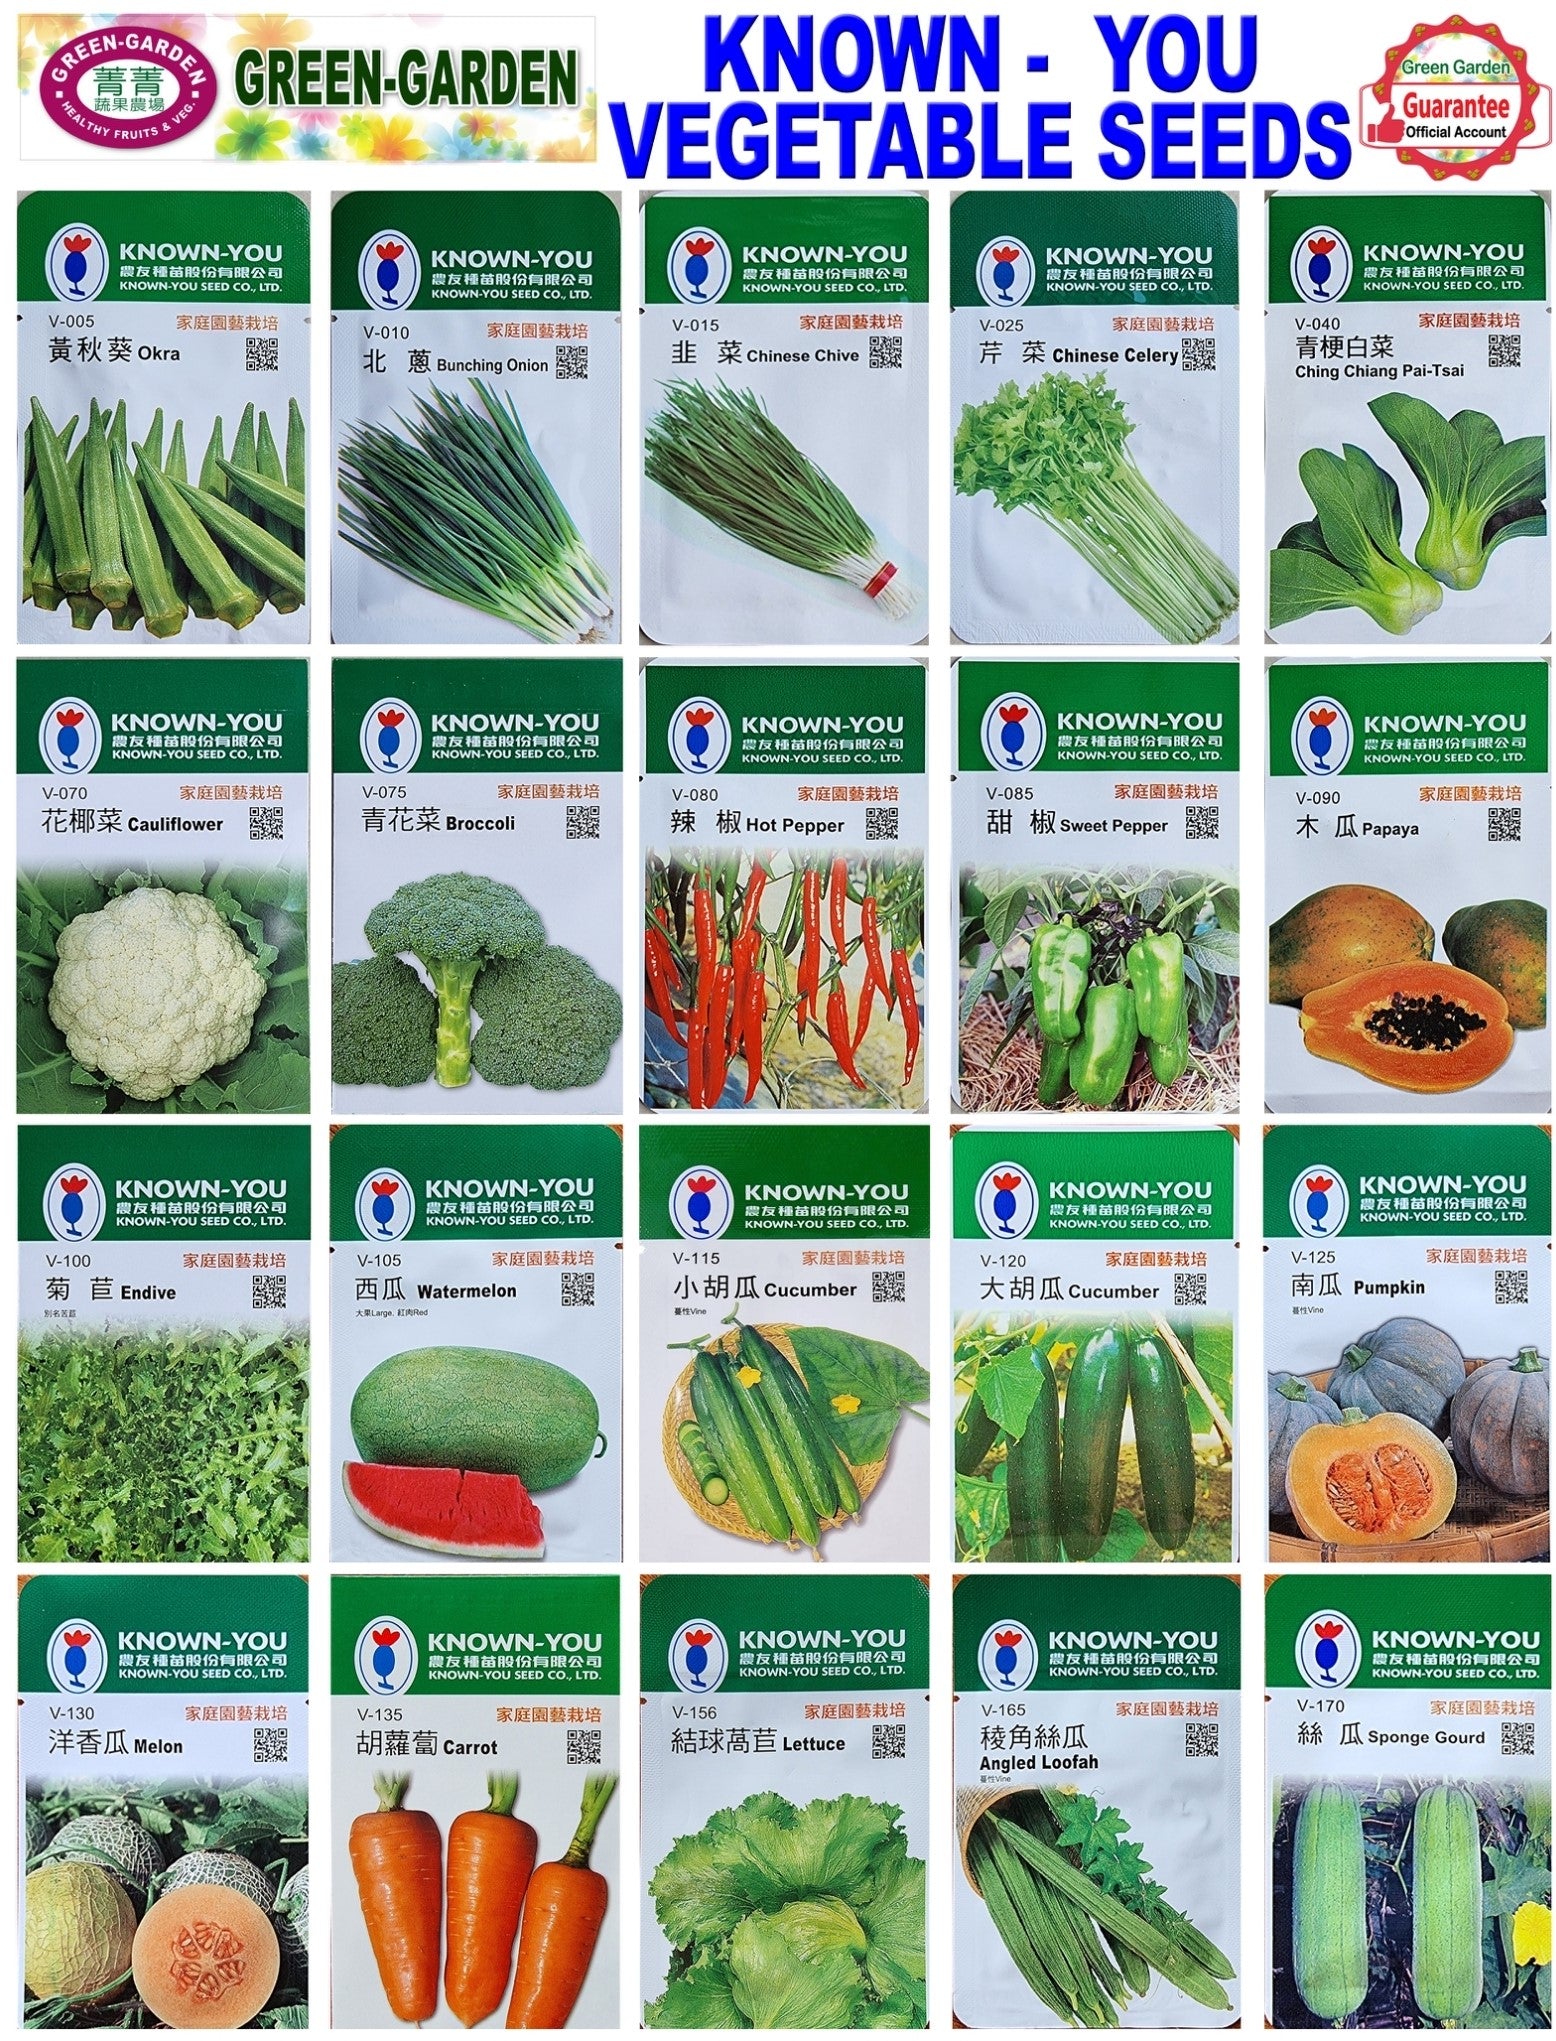 Known You Vegetable Seeds (V-120 Cucumber L)